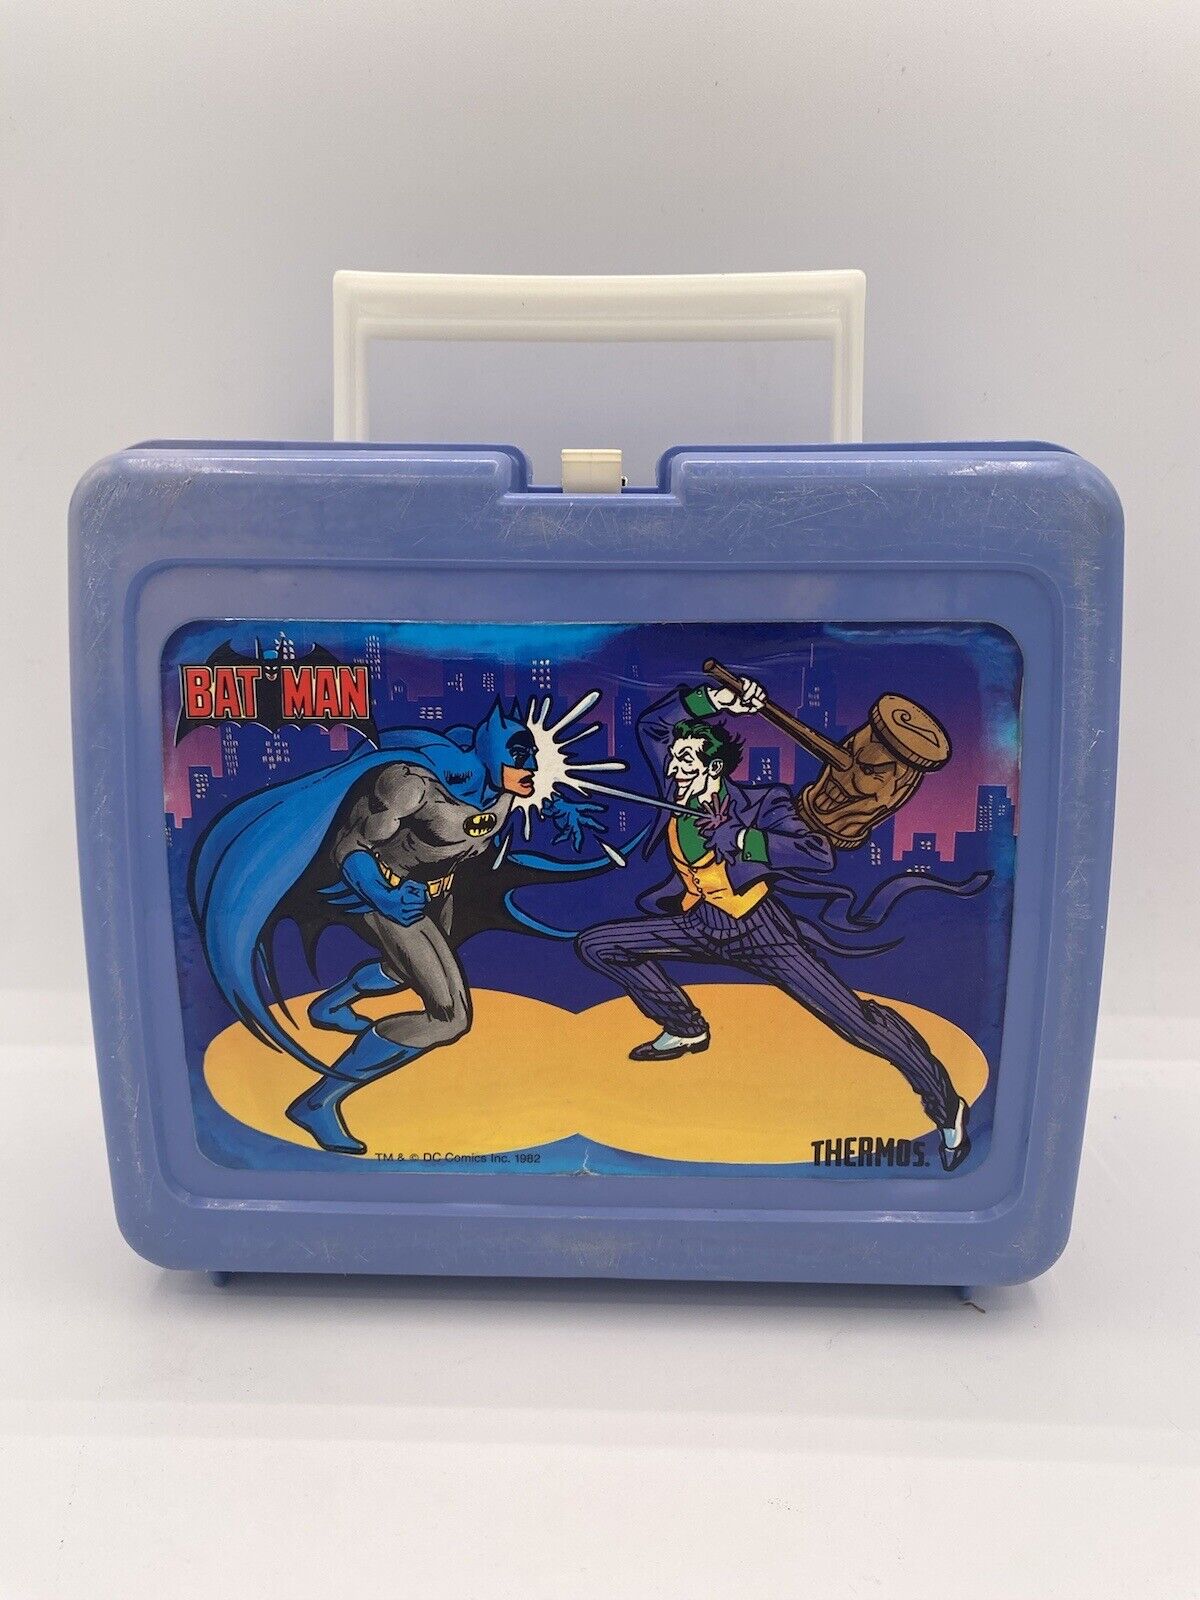 1982 Batman Vintage Blue Plastic Lunch Box By Thermos